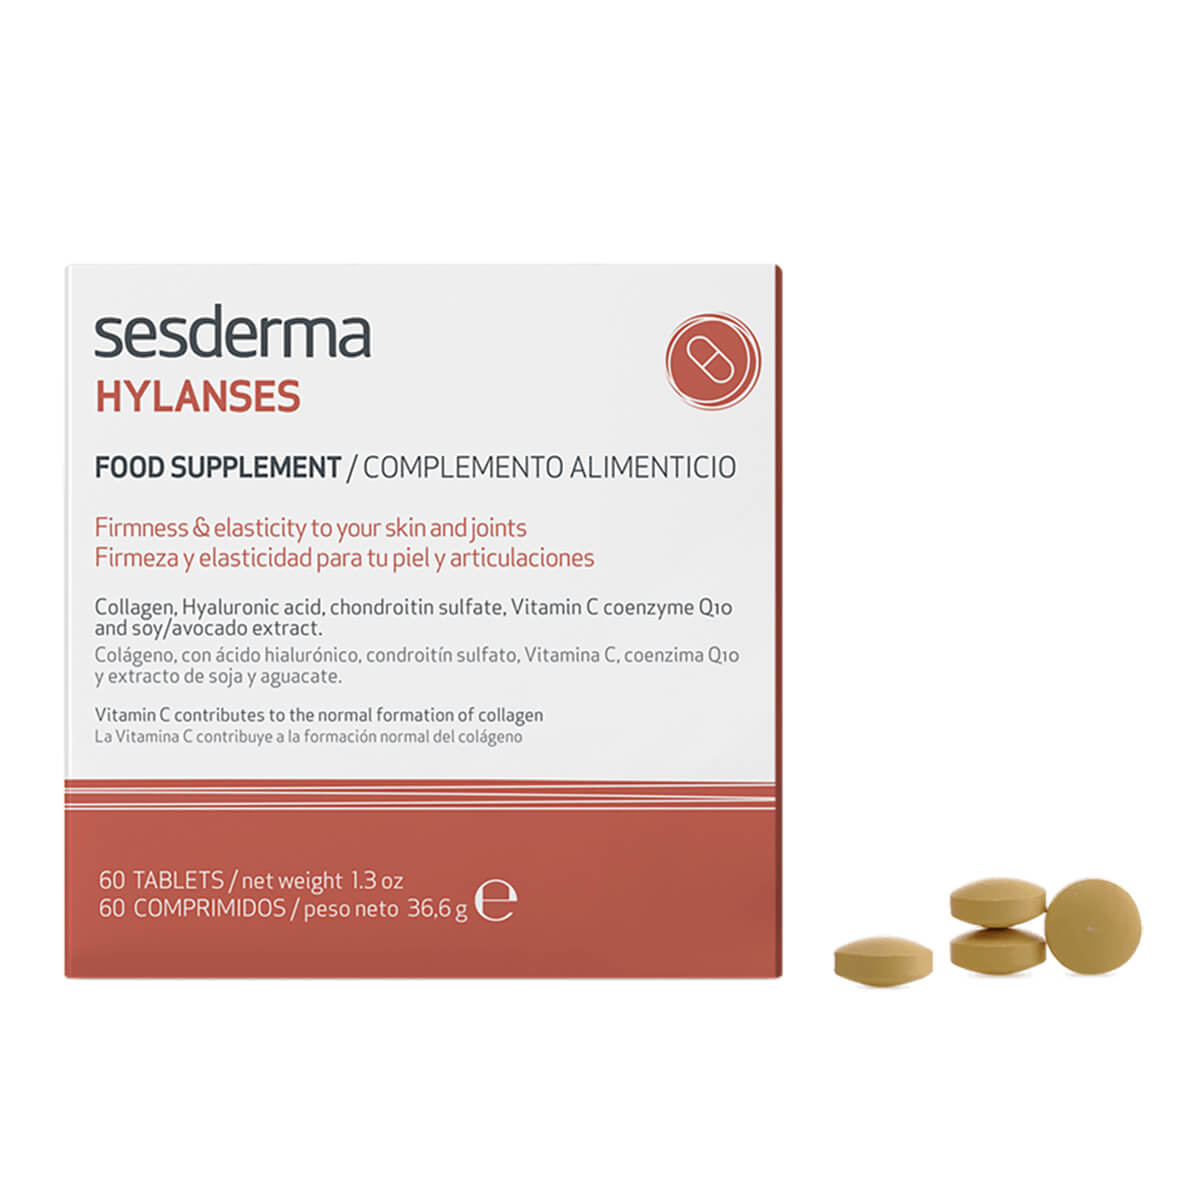 Hylanses для костей, антиоксидант, антивозрастное действие, 60 таблеток, Sesderma